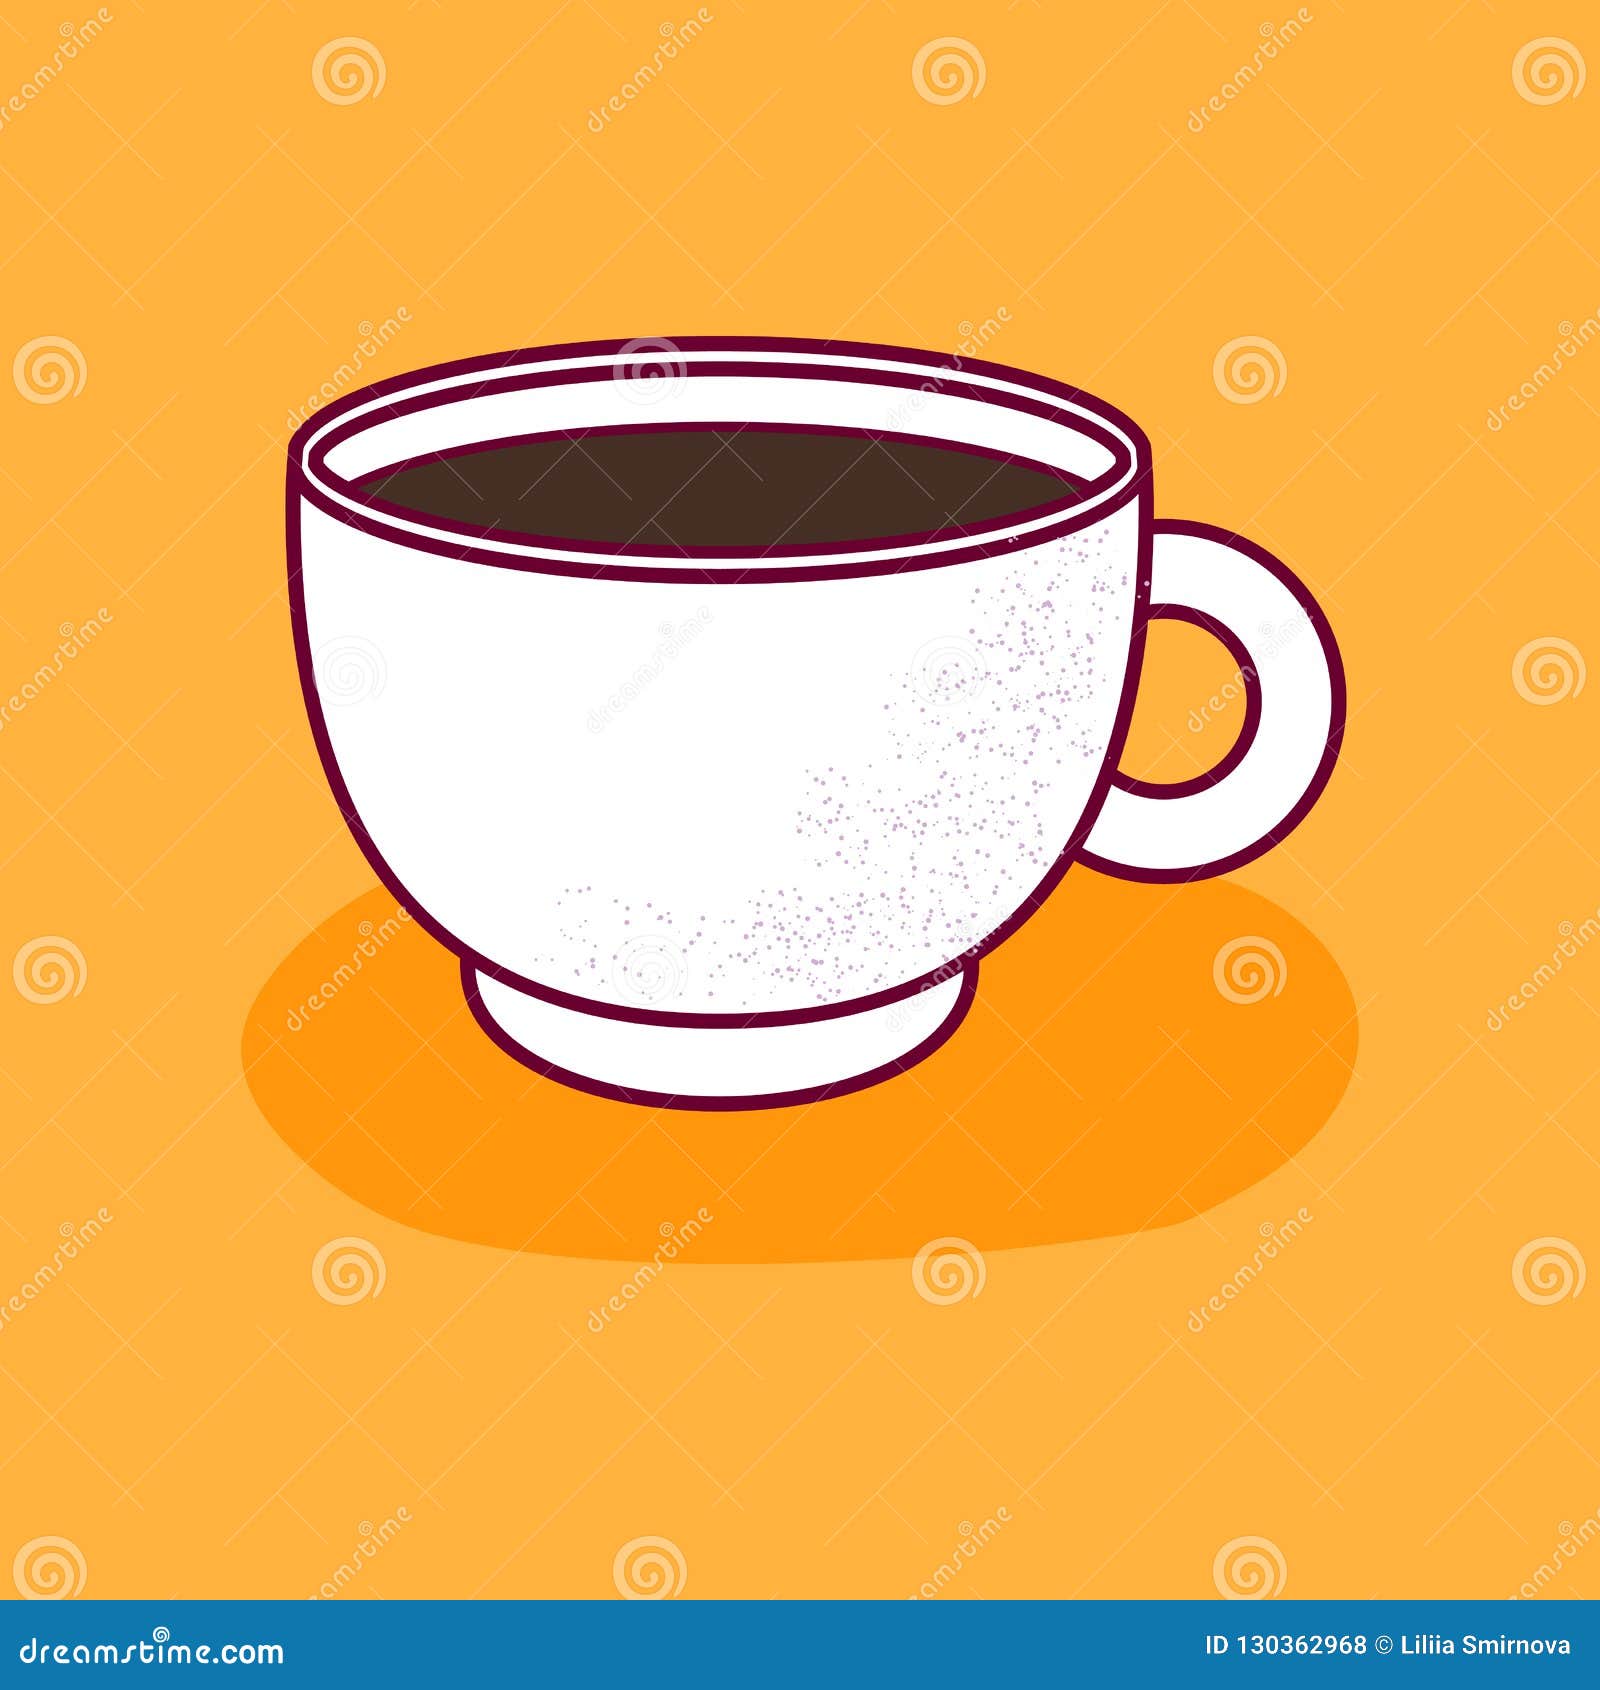 Vector Cartoon Isolated Teacup with Tea or Coffee Stock Vector -  Illustration of cartoon, isolated: 130362968